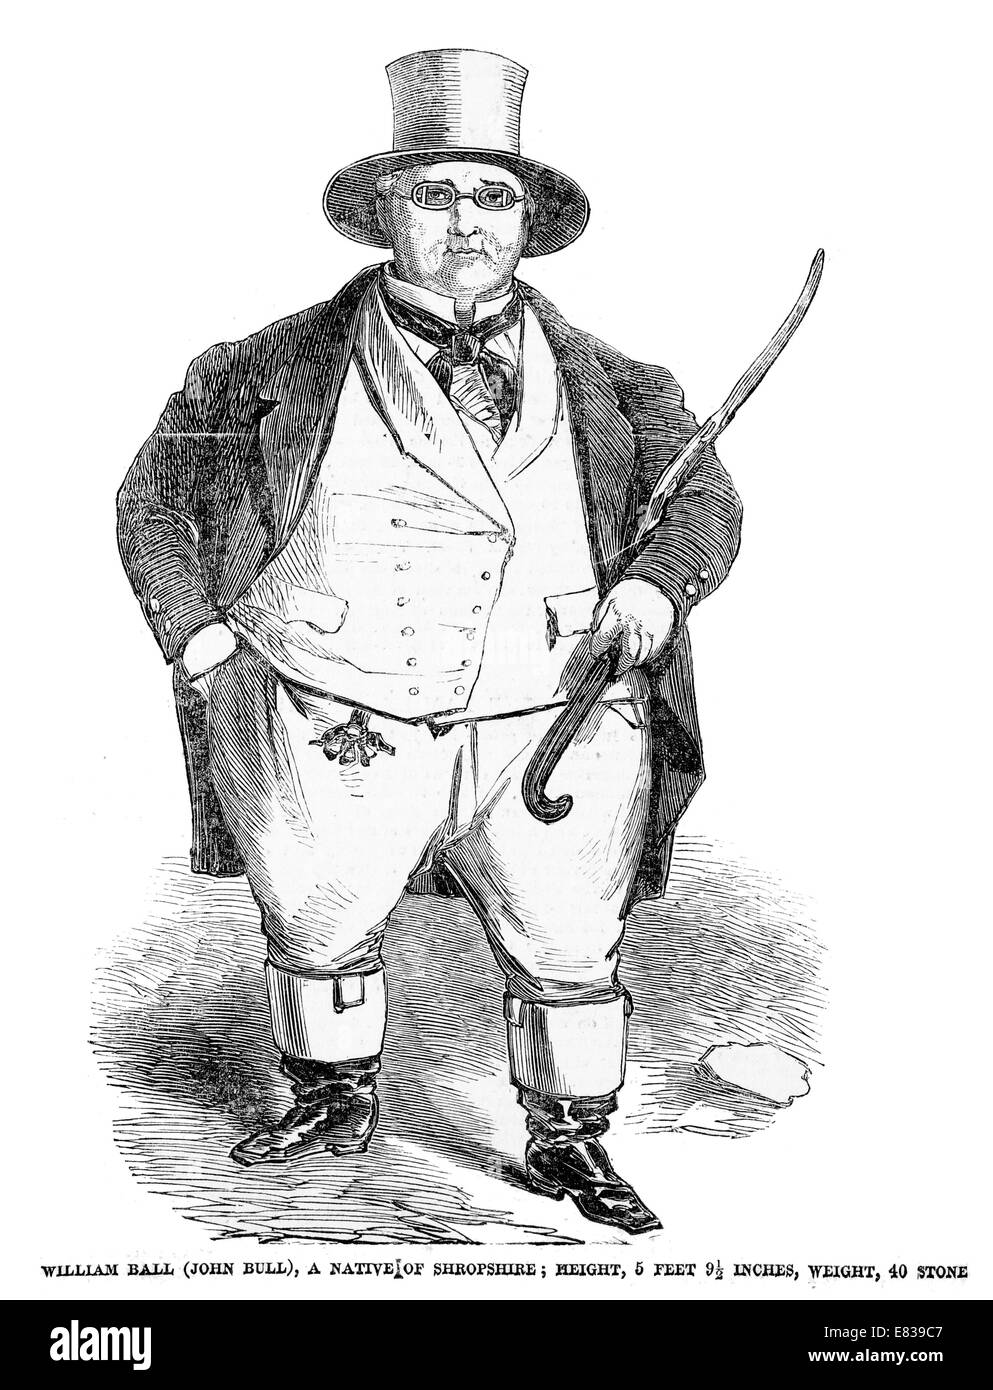 William Ball ( John Bull ) Native of Shropshire 40 stone man circa 1853 Stock Photo